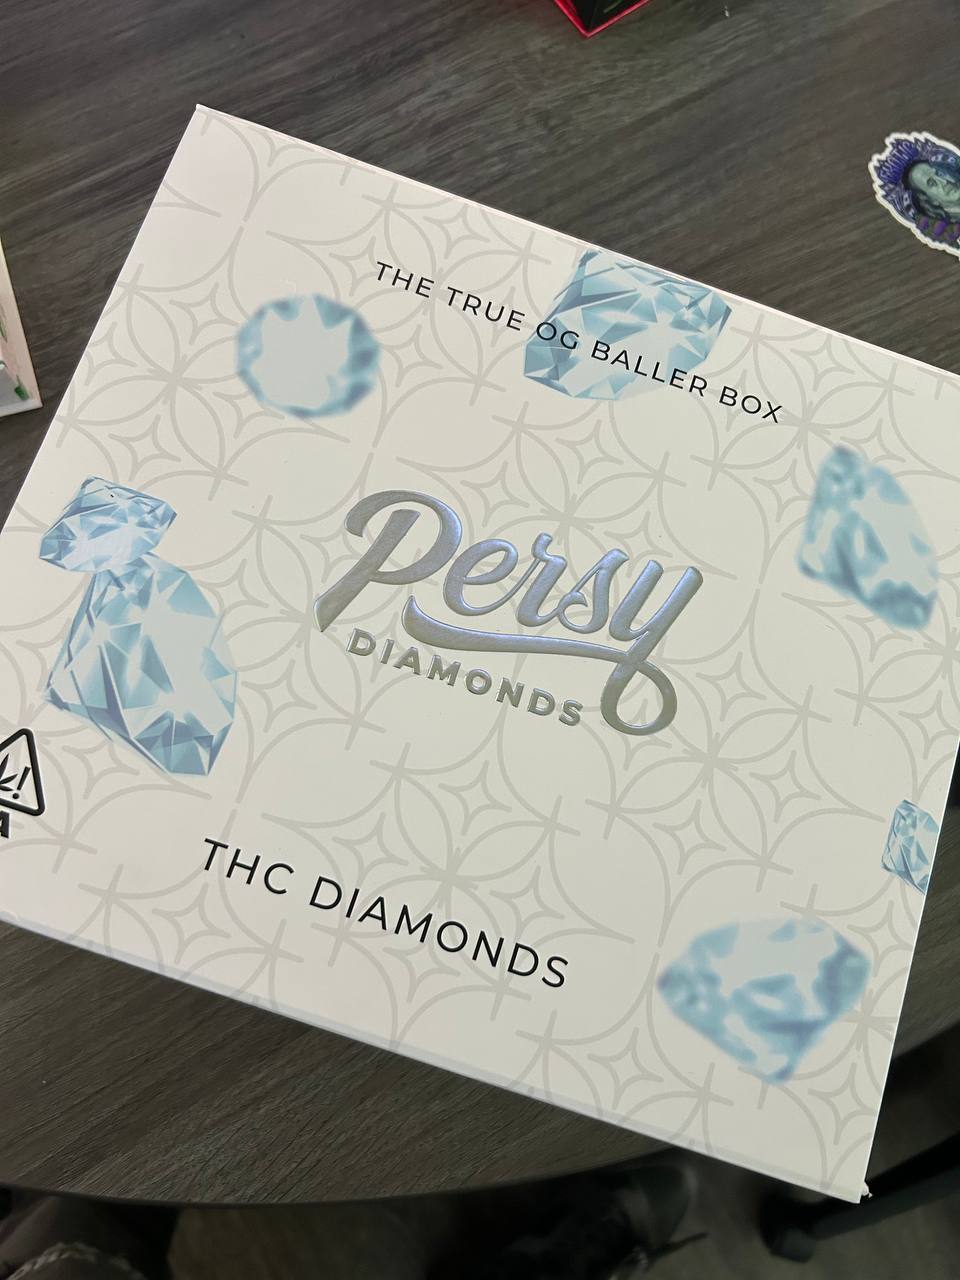 persy diamonds 1 oz price, persy diamonds baller jars, persy diamonds cereal milk, persy diamonds concentrate, persy diamonds wax, persy diamonds baller box,